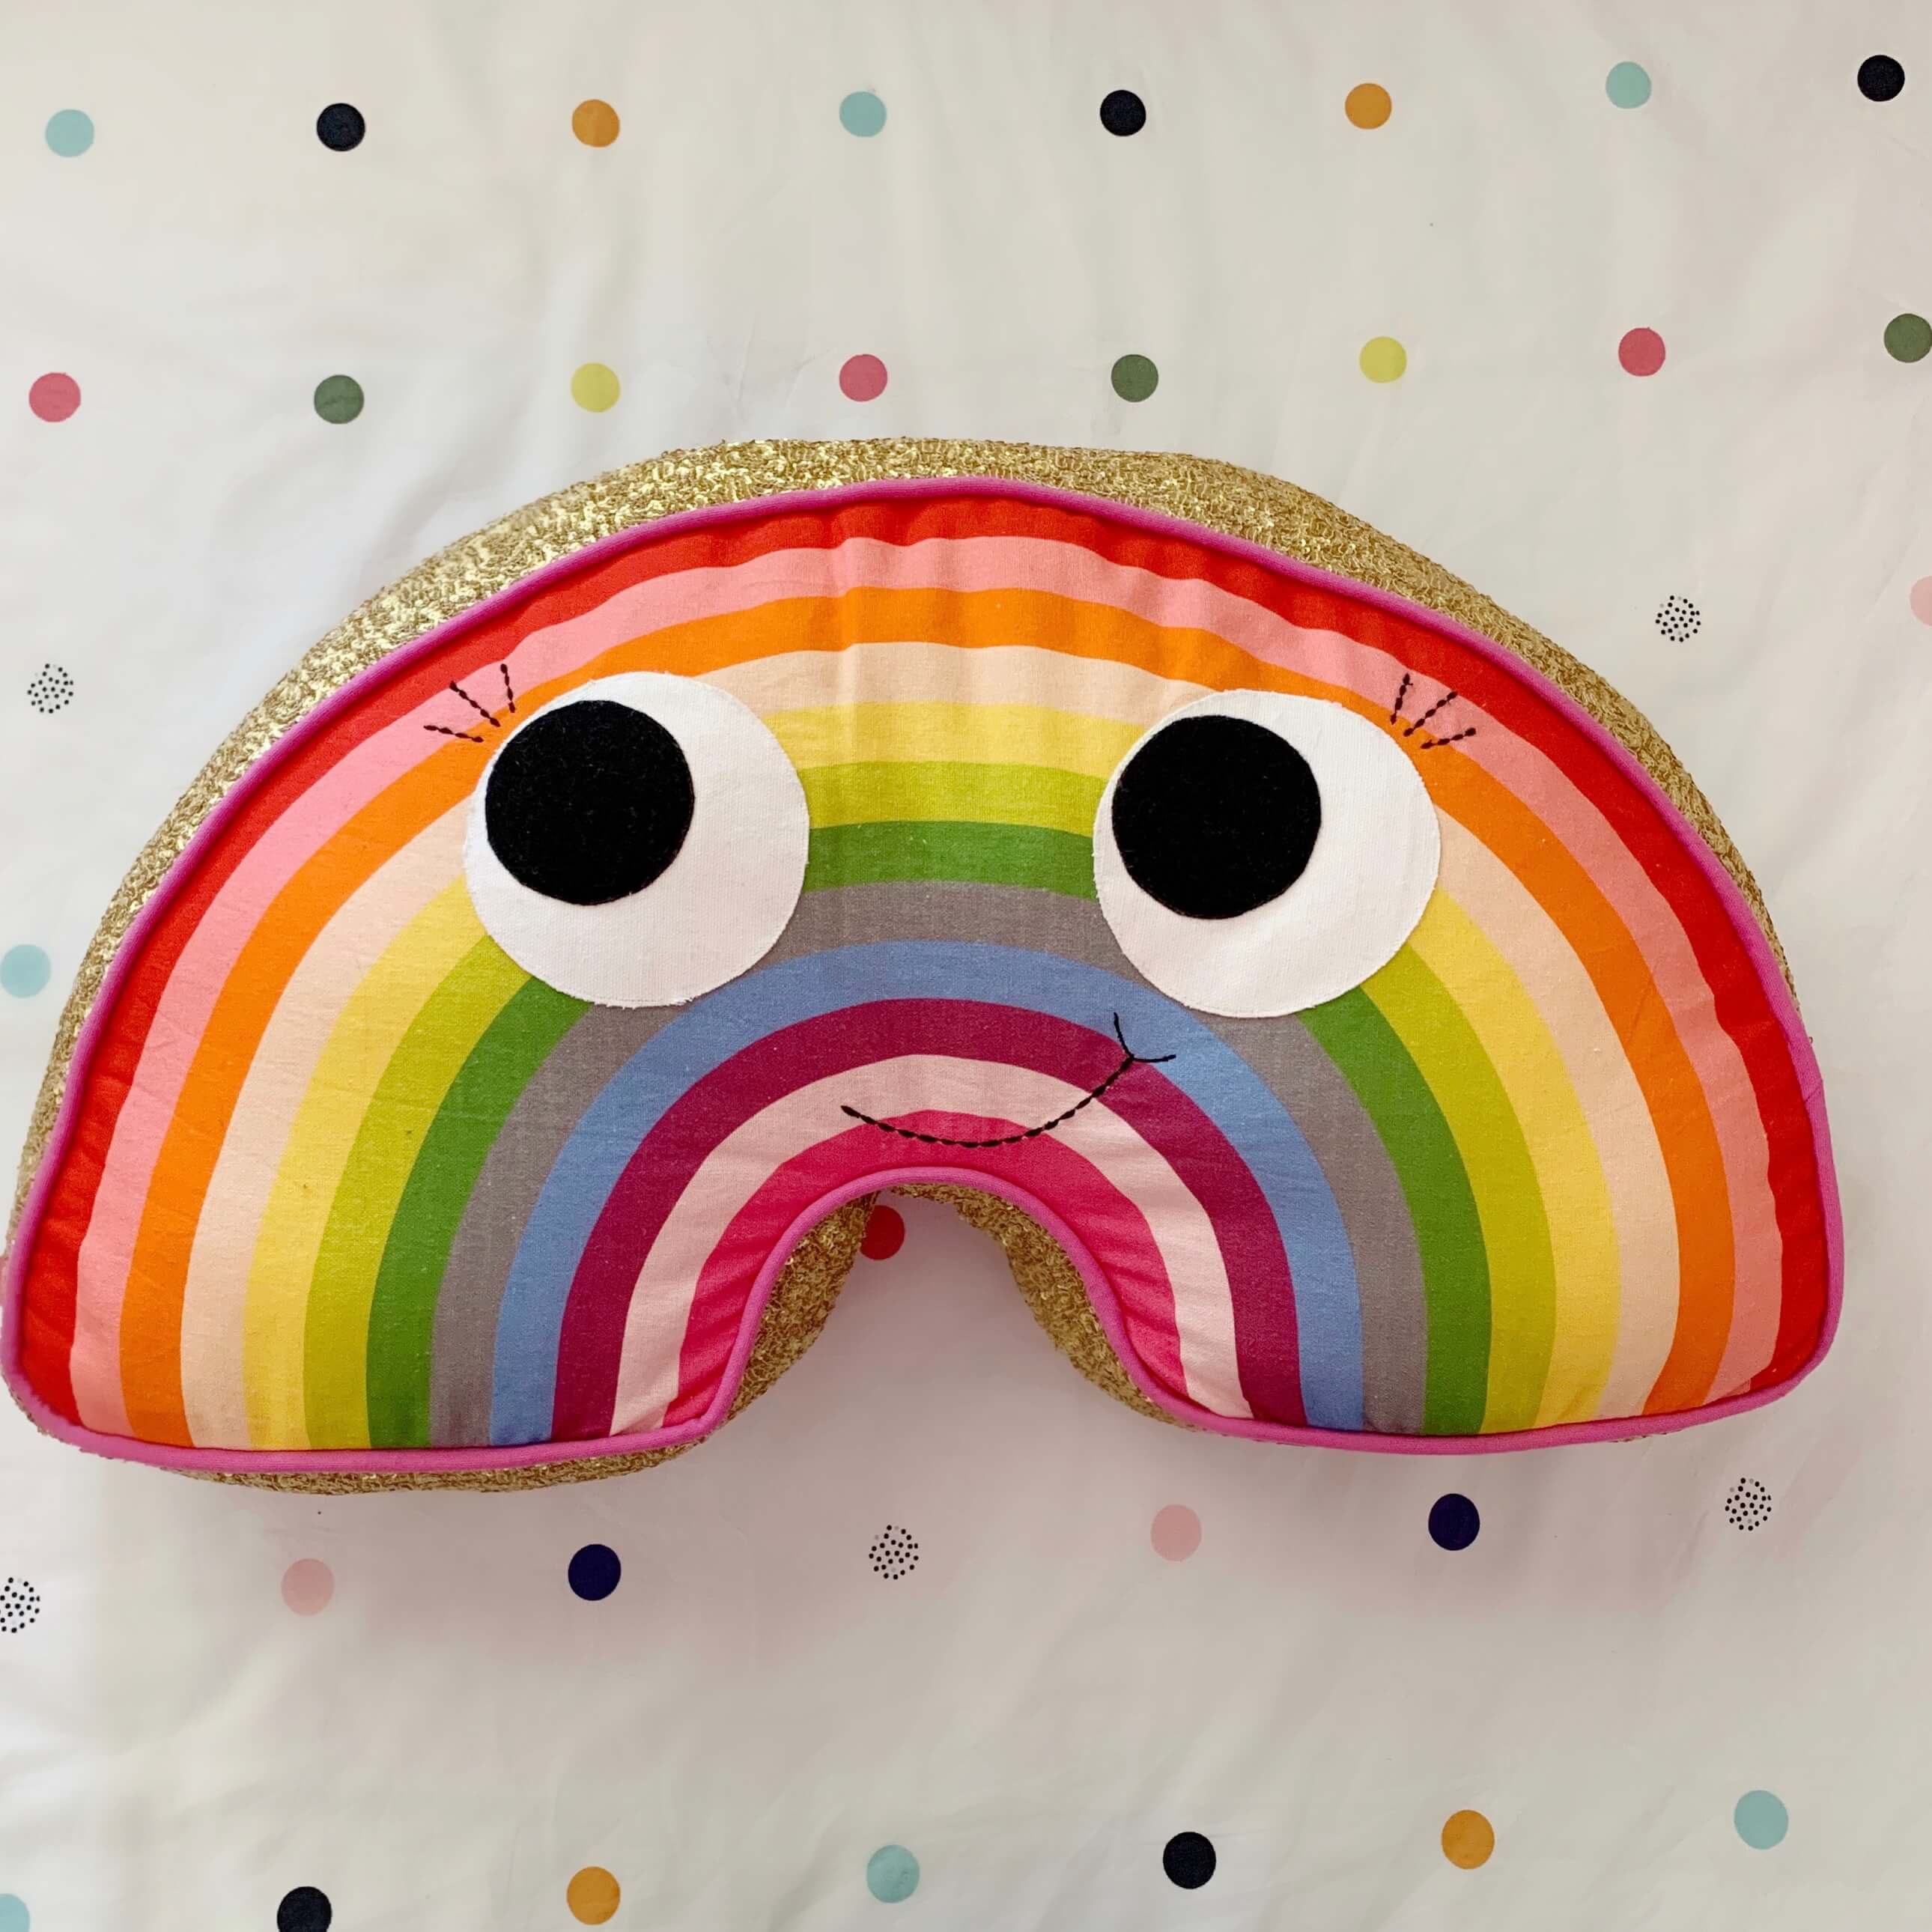 Kip and co rainbow sequin cushion |The Home Maven